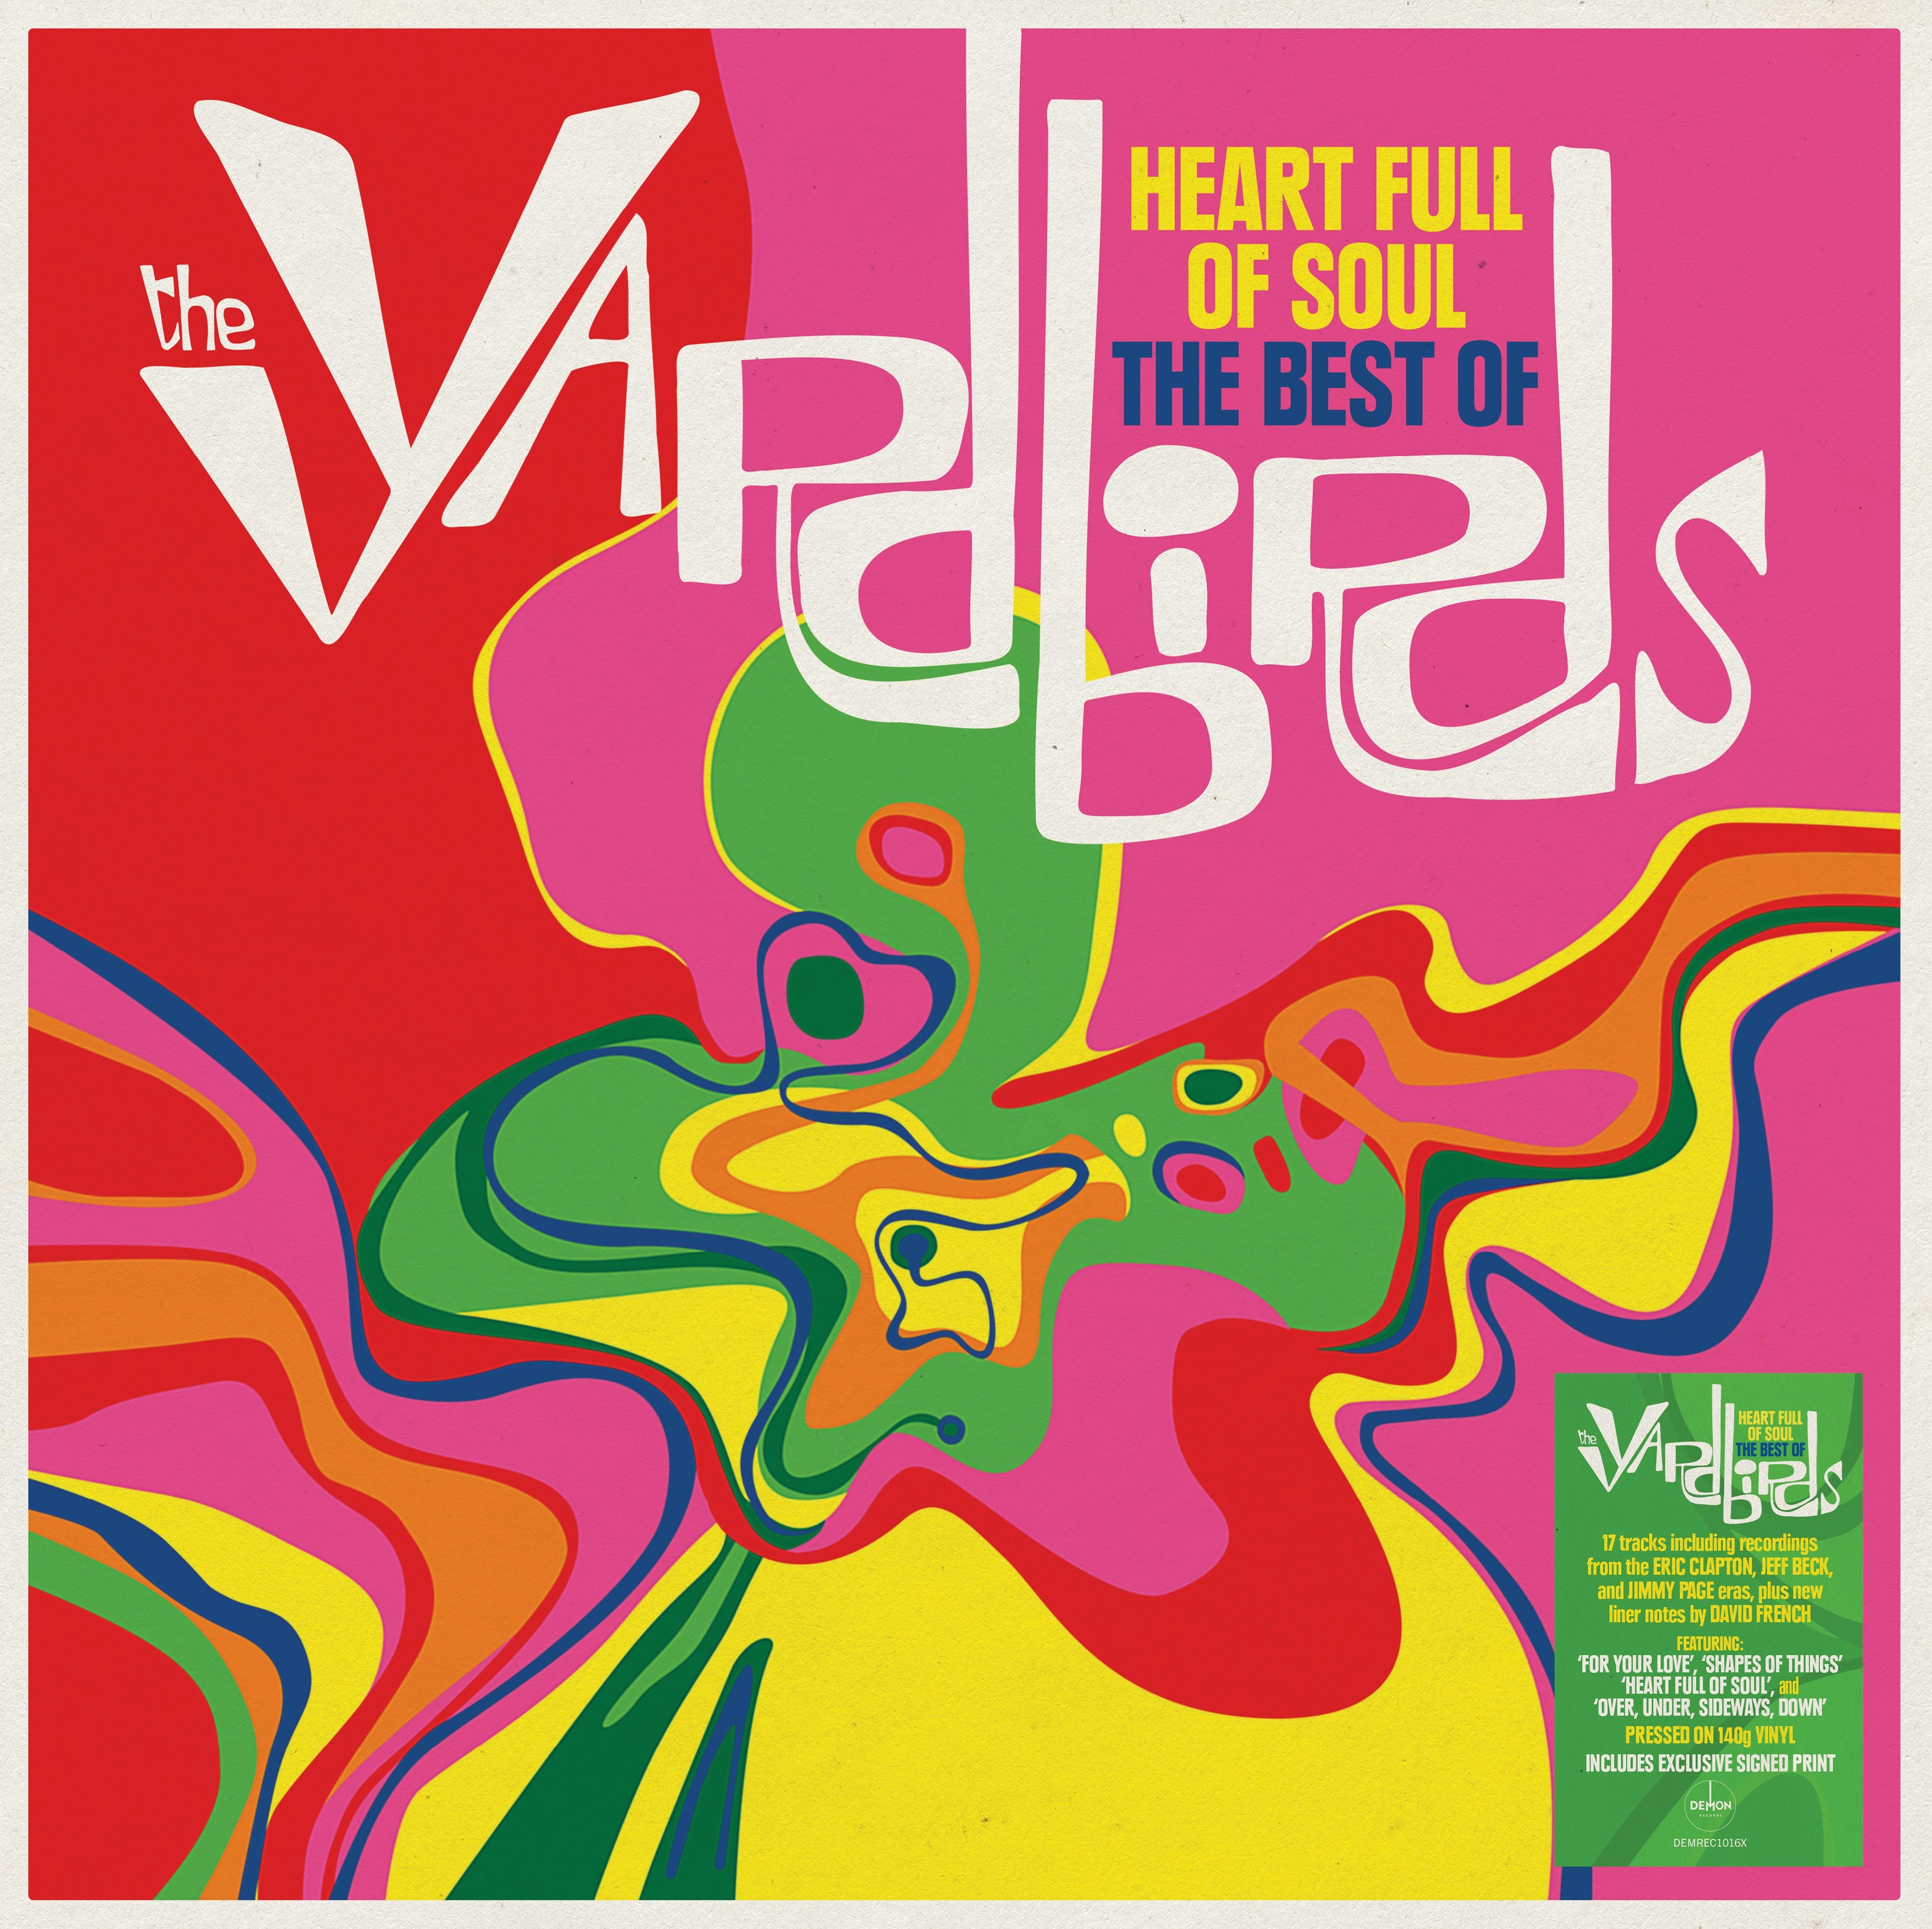 Album artwork for Album artwork for Heart Full Of Soul – The Best Of by The Yardbirds by Heart Full Of Soul – The Best Of - The Yardbirds